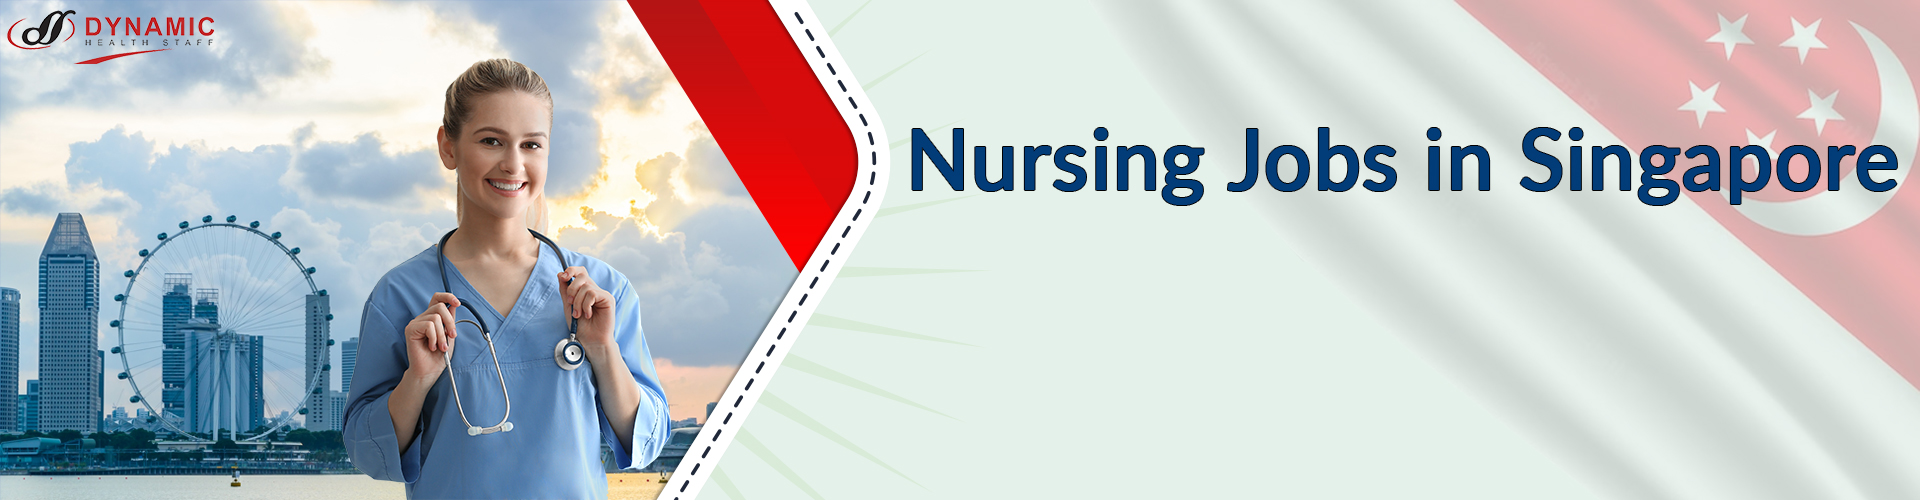 Nursing Jobs in Singapore